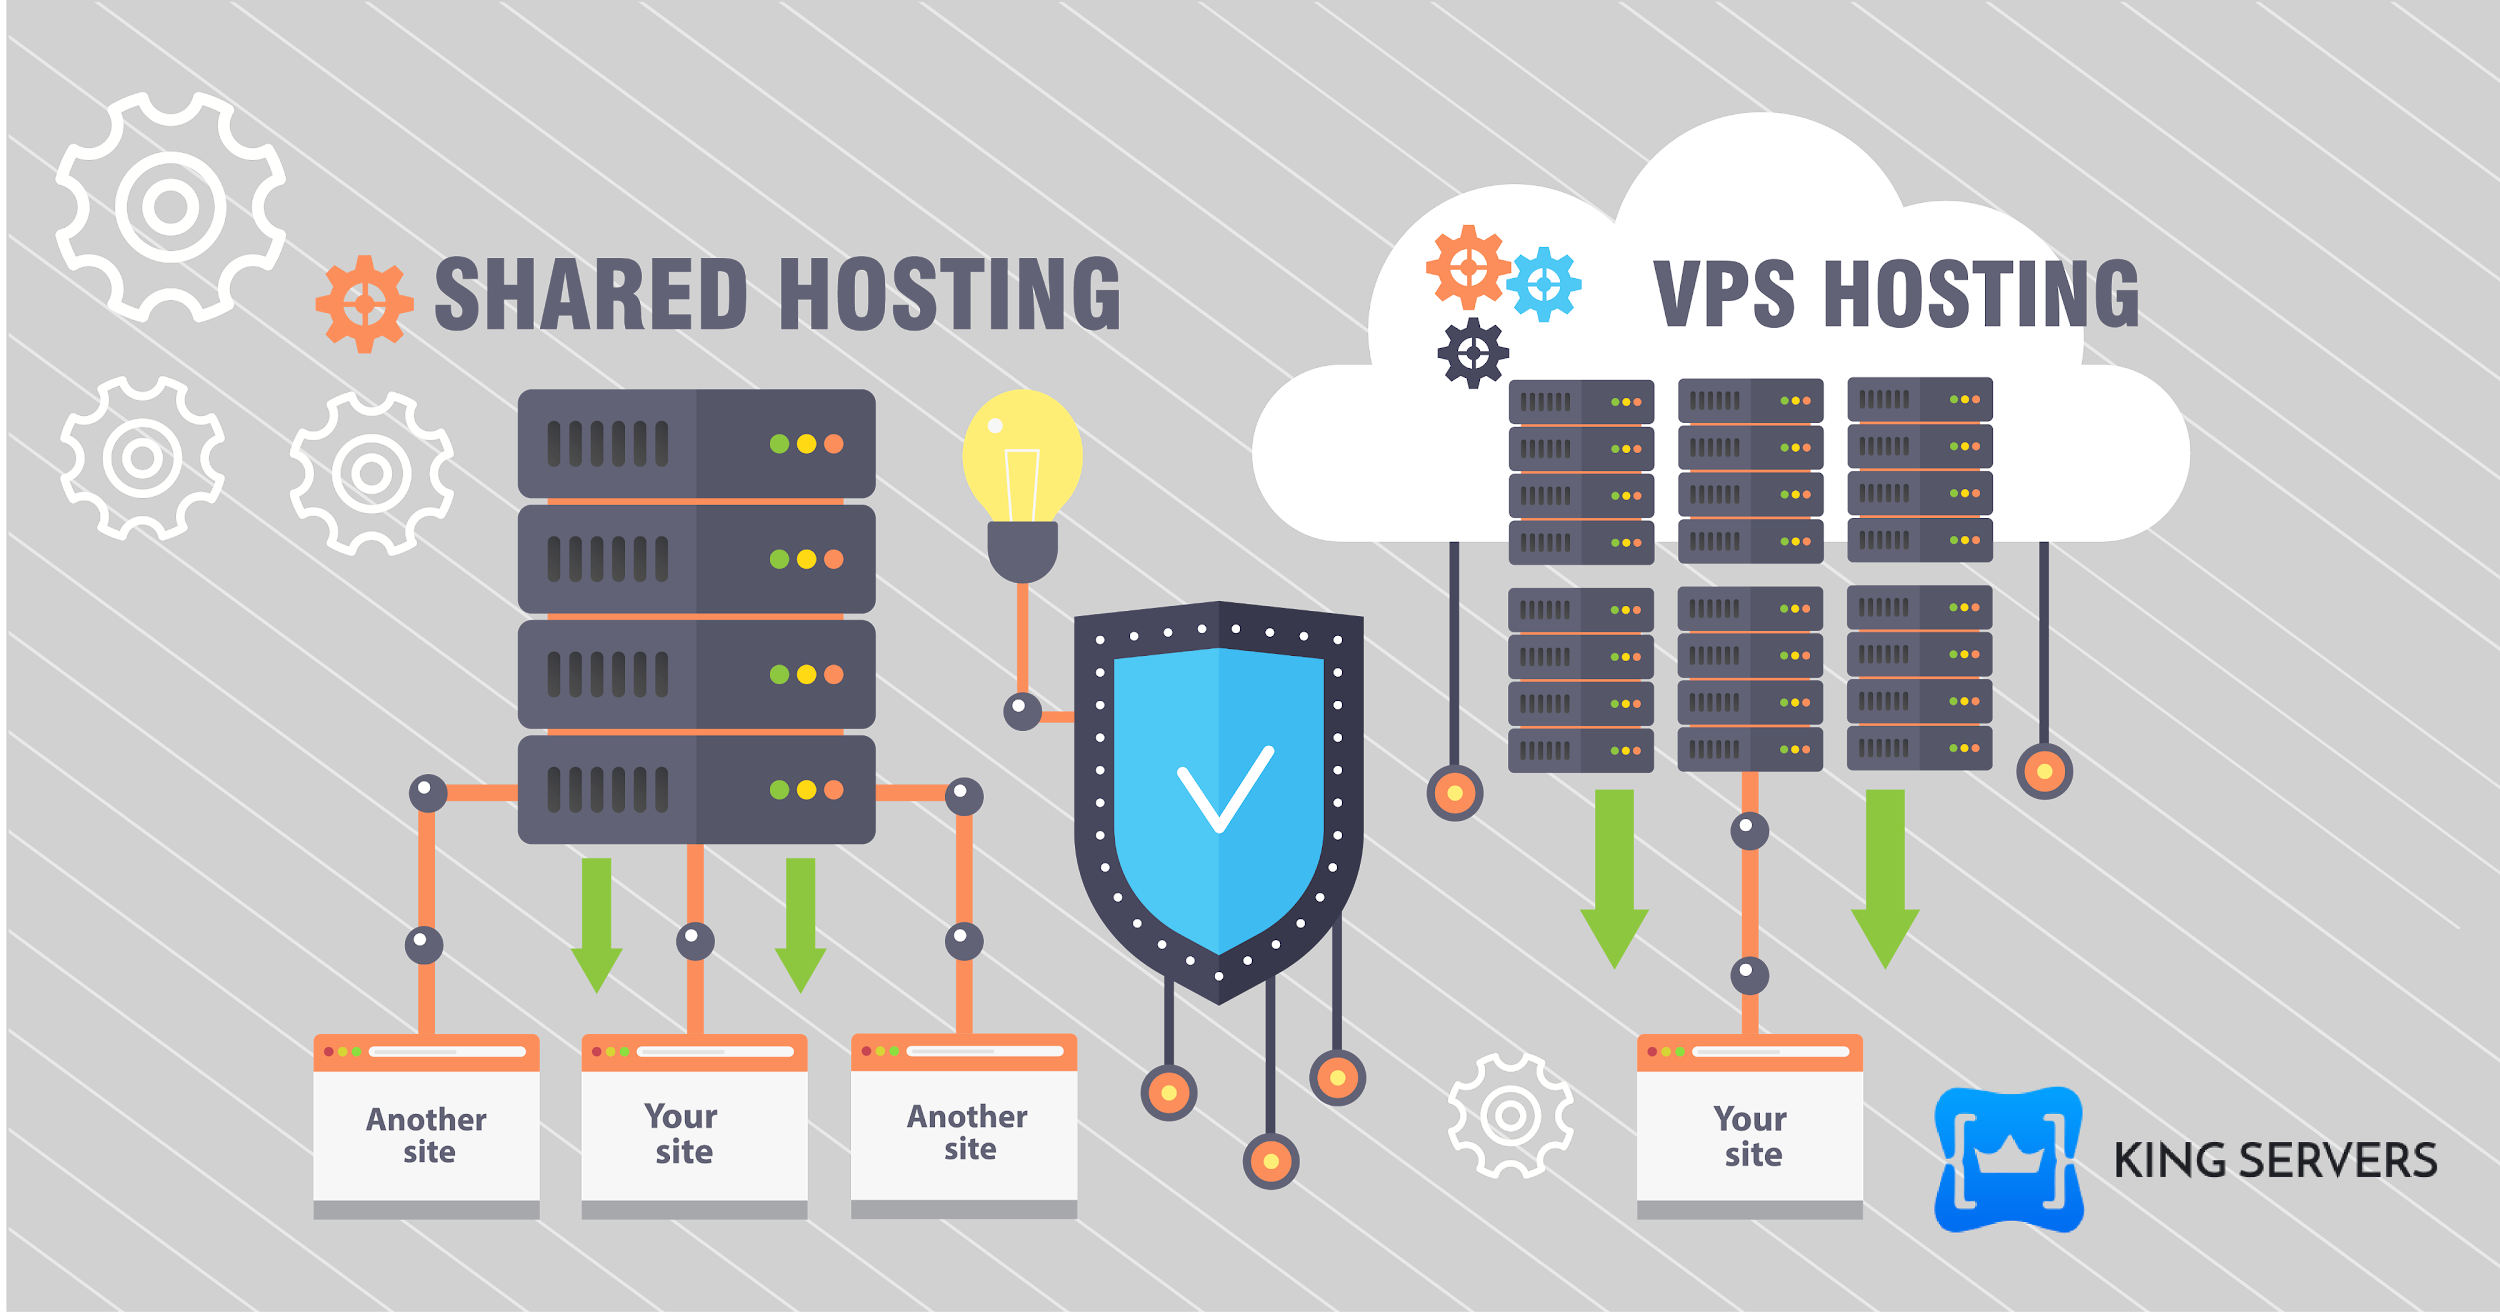 91vpn server virtualization